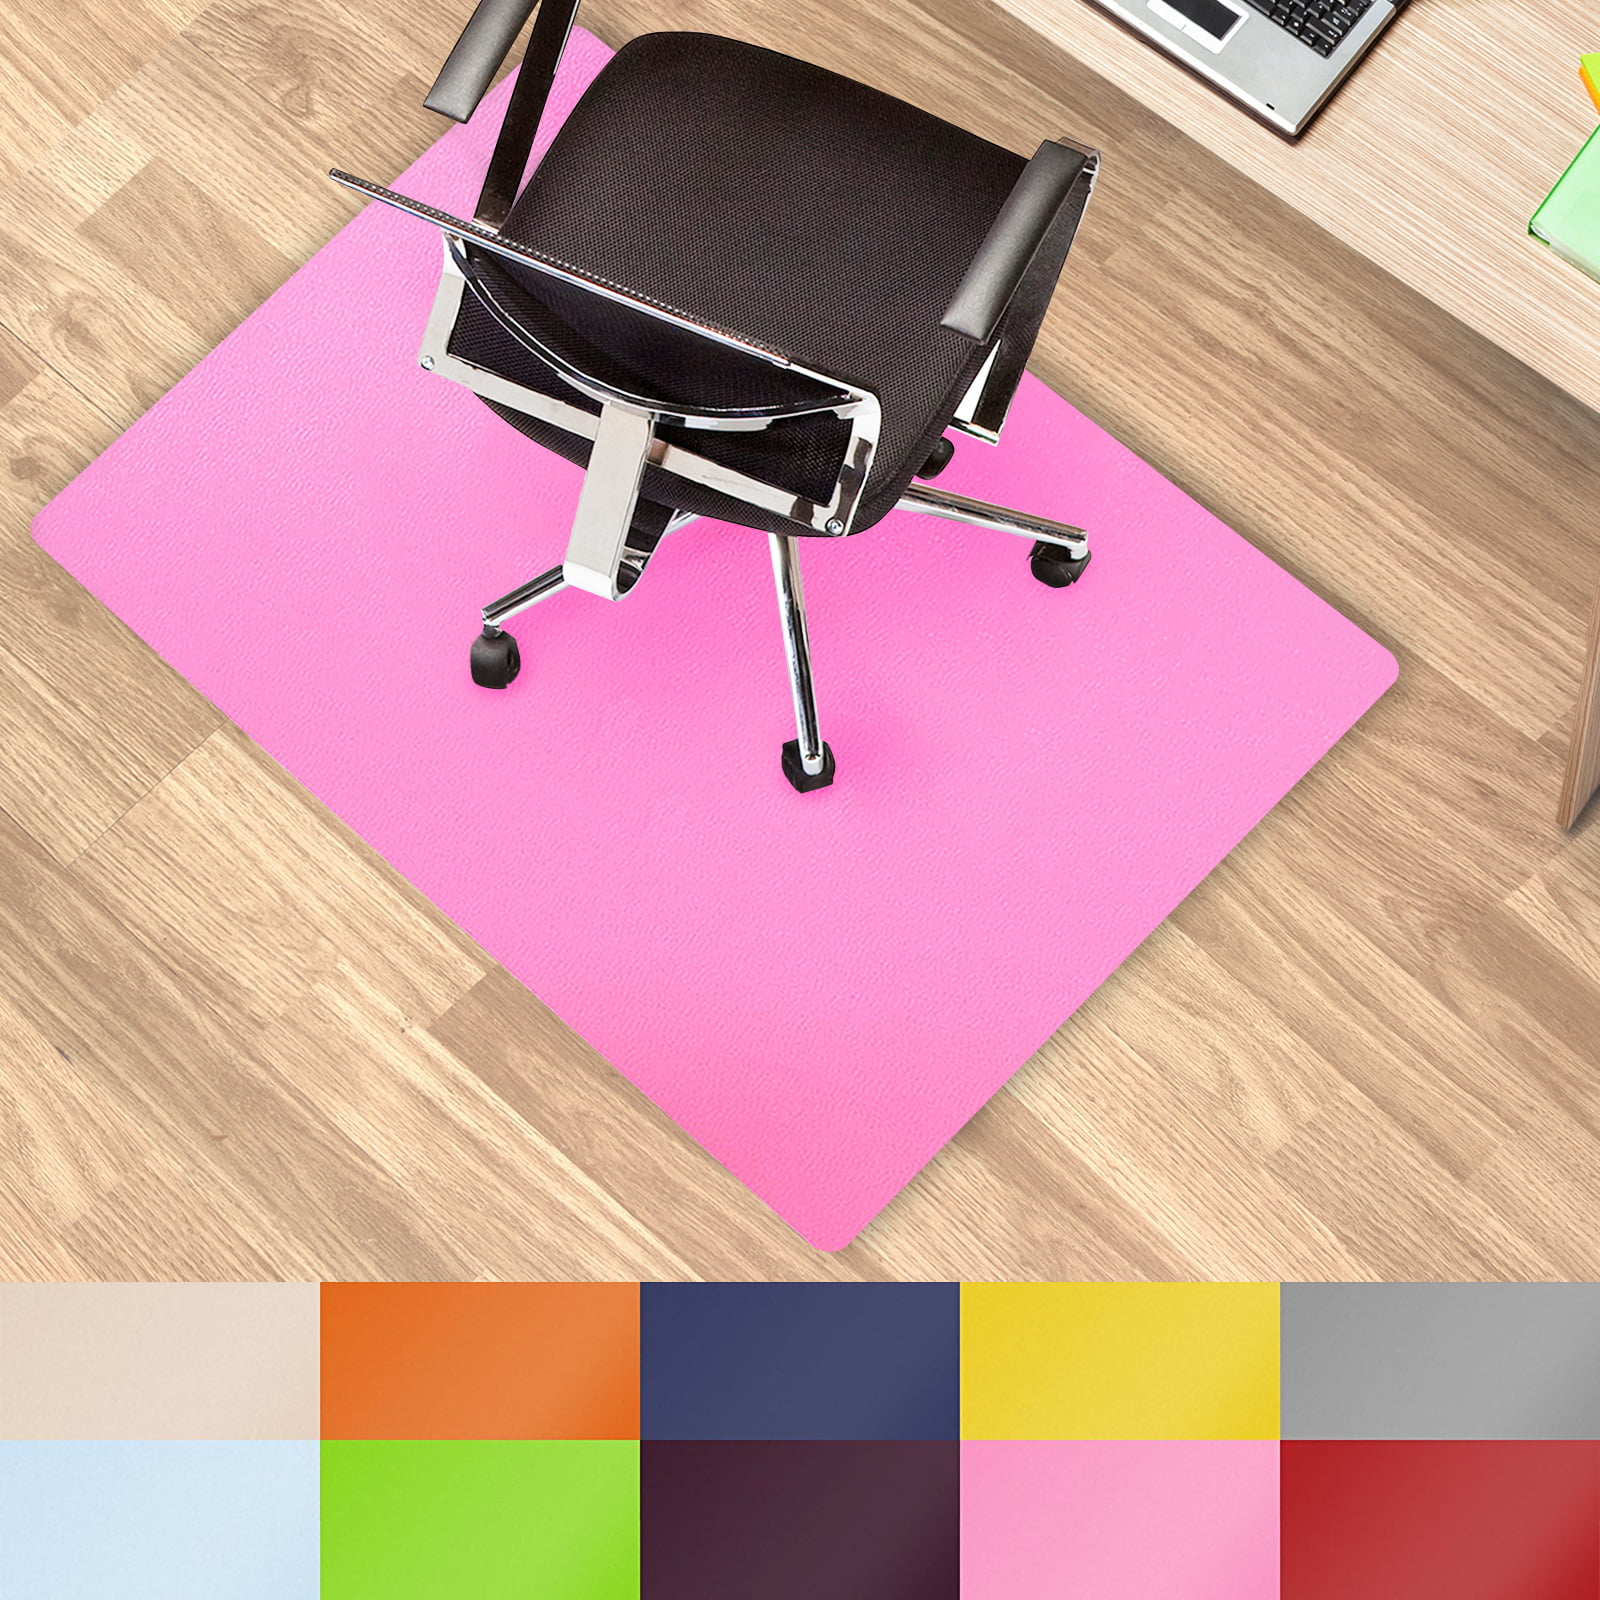 Polypropylene Chair Floor Protector, Desk Chair Mats For Laminate Floors